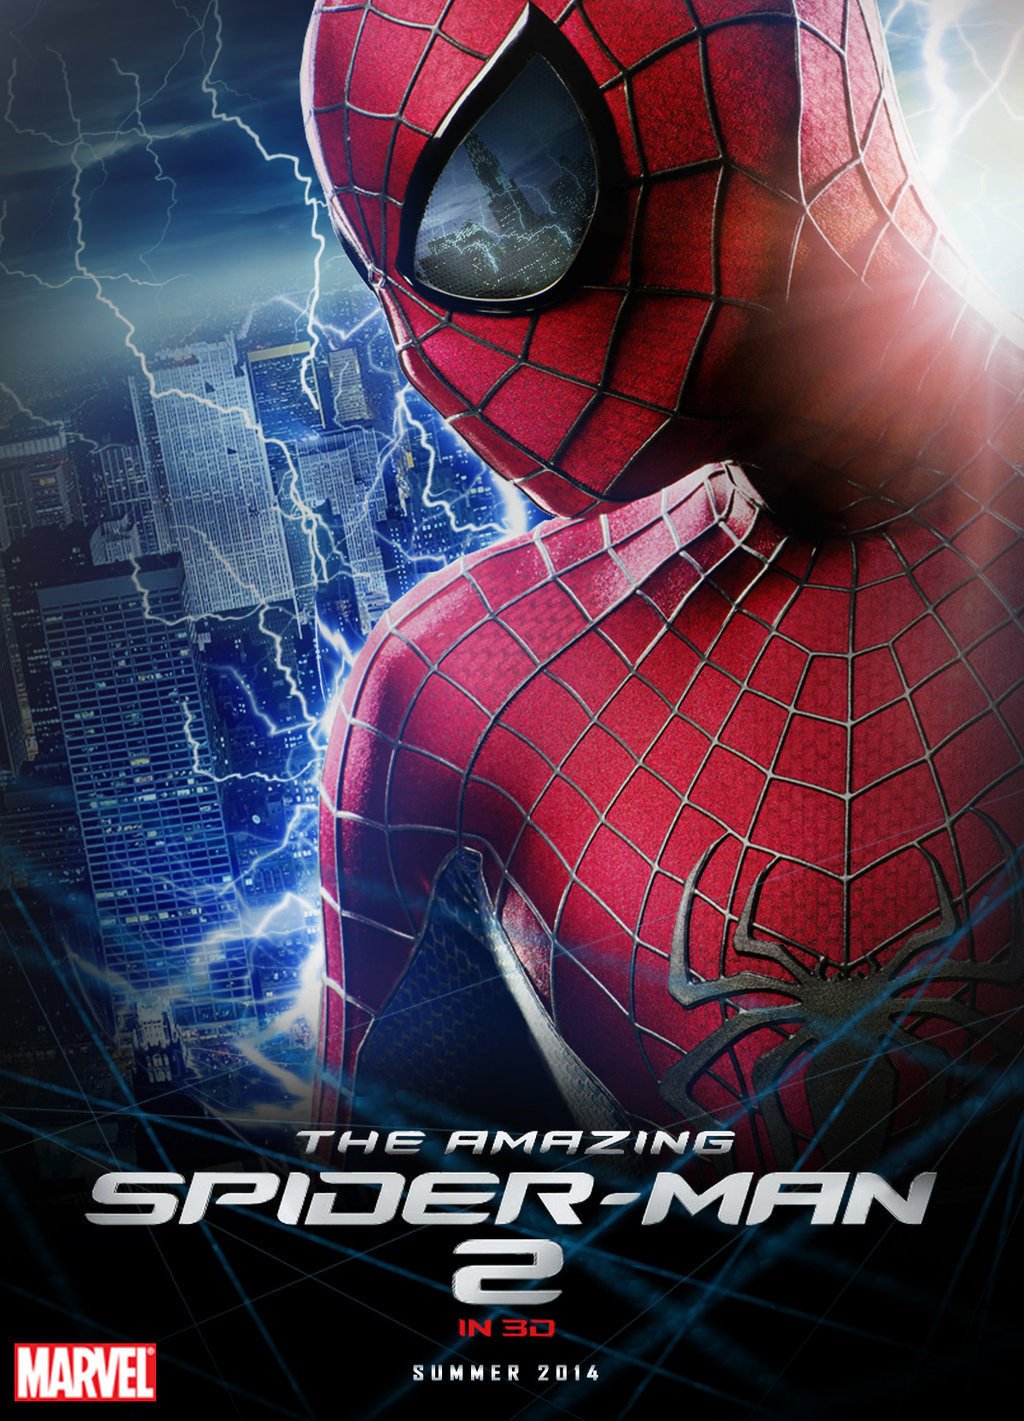 Making of The Amazing Spider-Man 2 Animation - Adriano Sanna